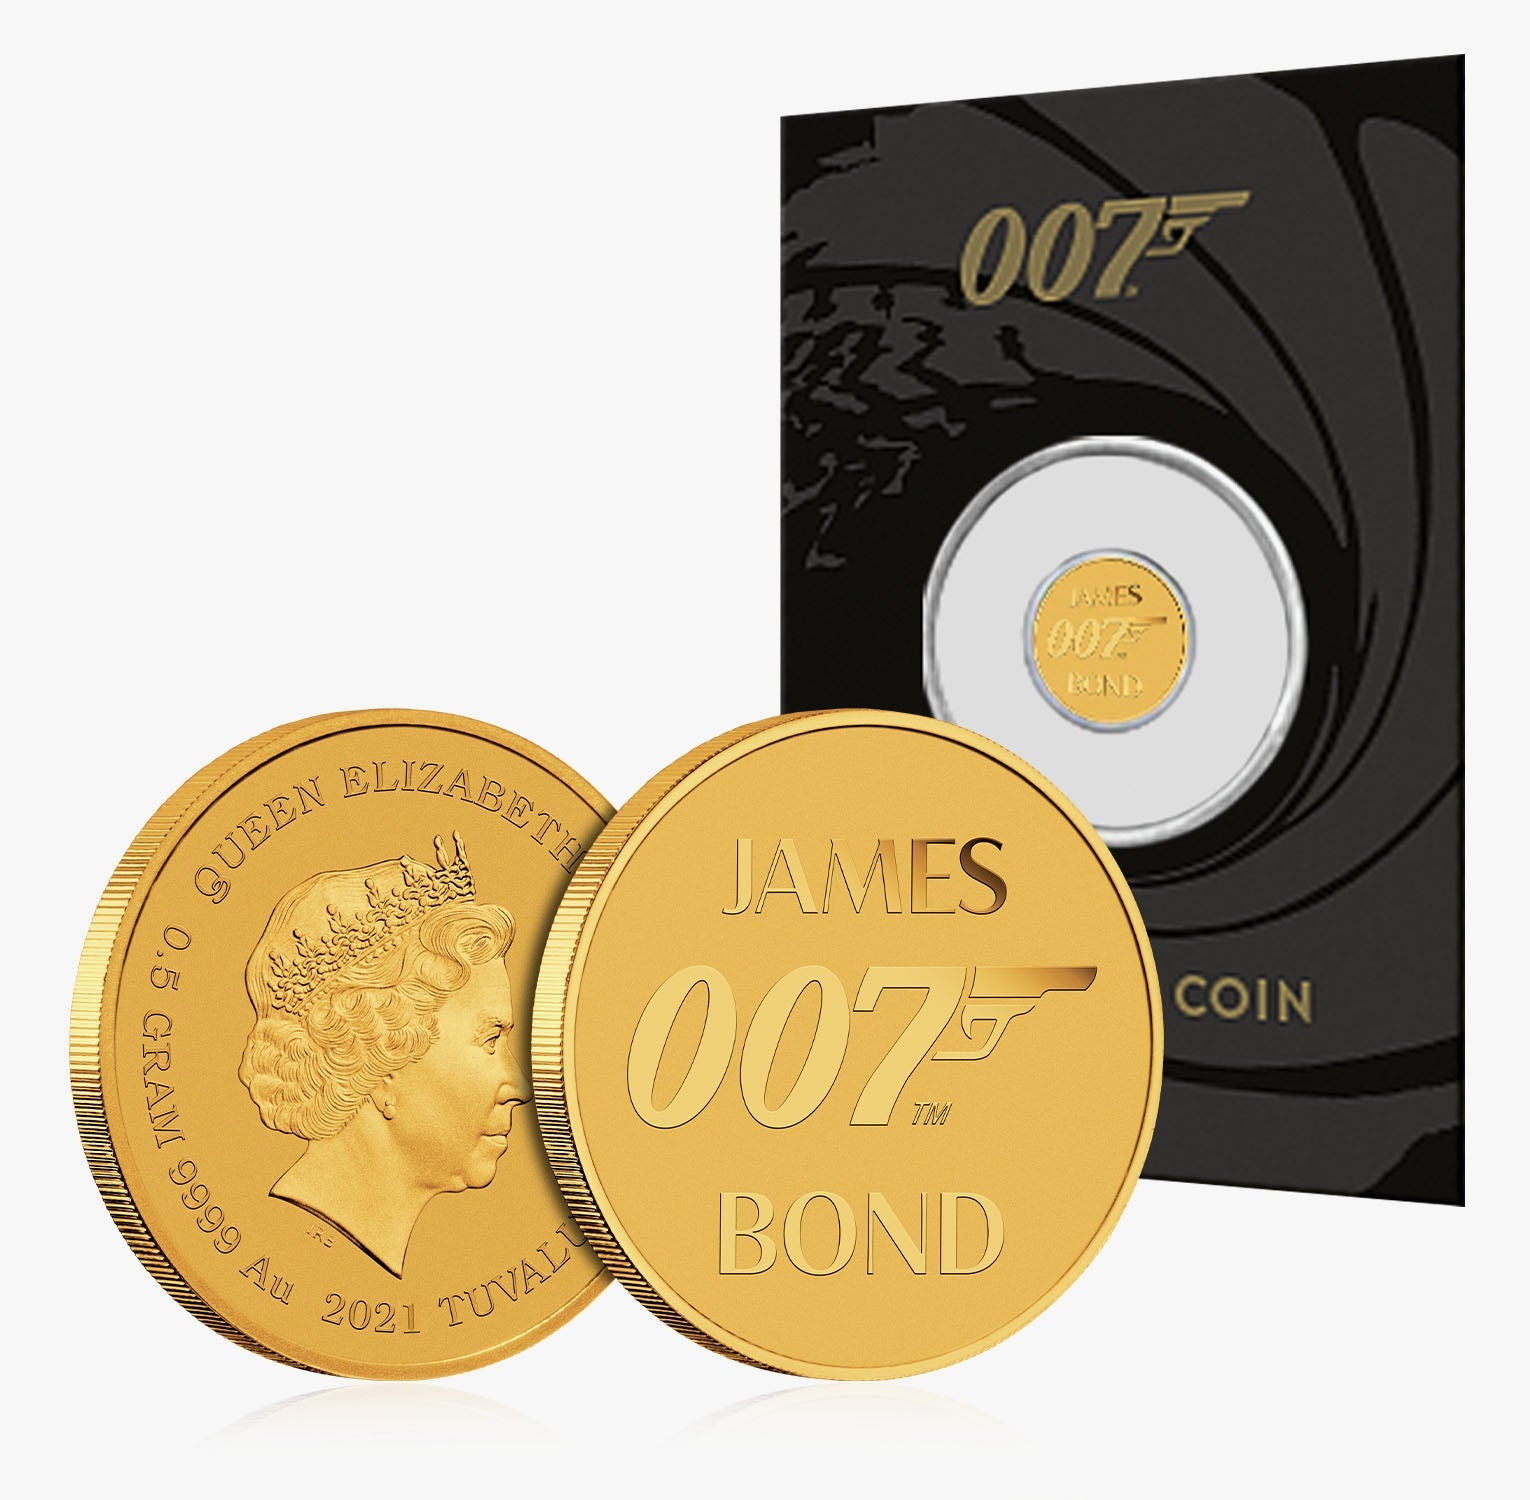 Official James Bond Silver and Gold Bundle